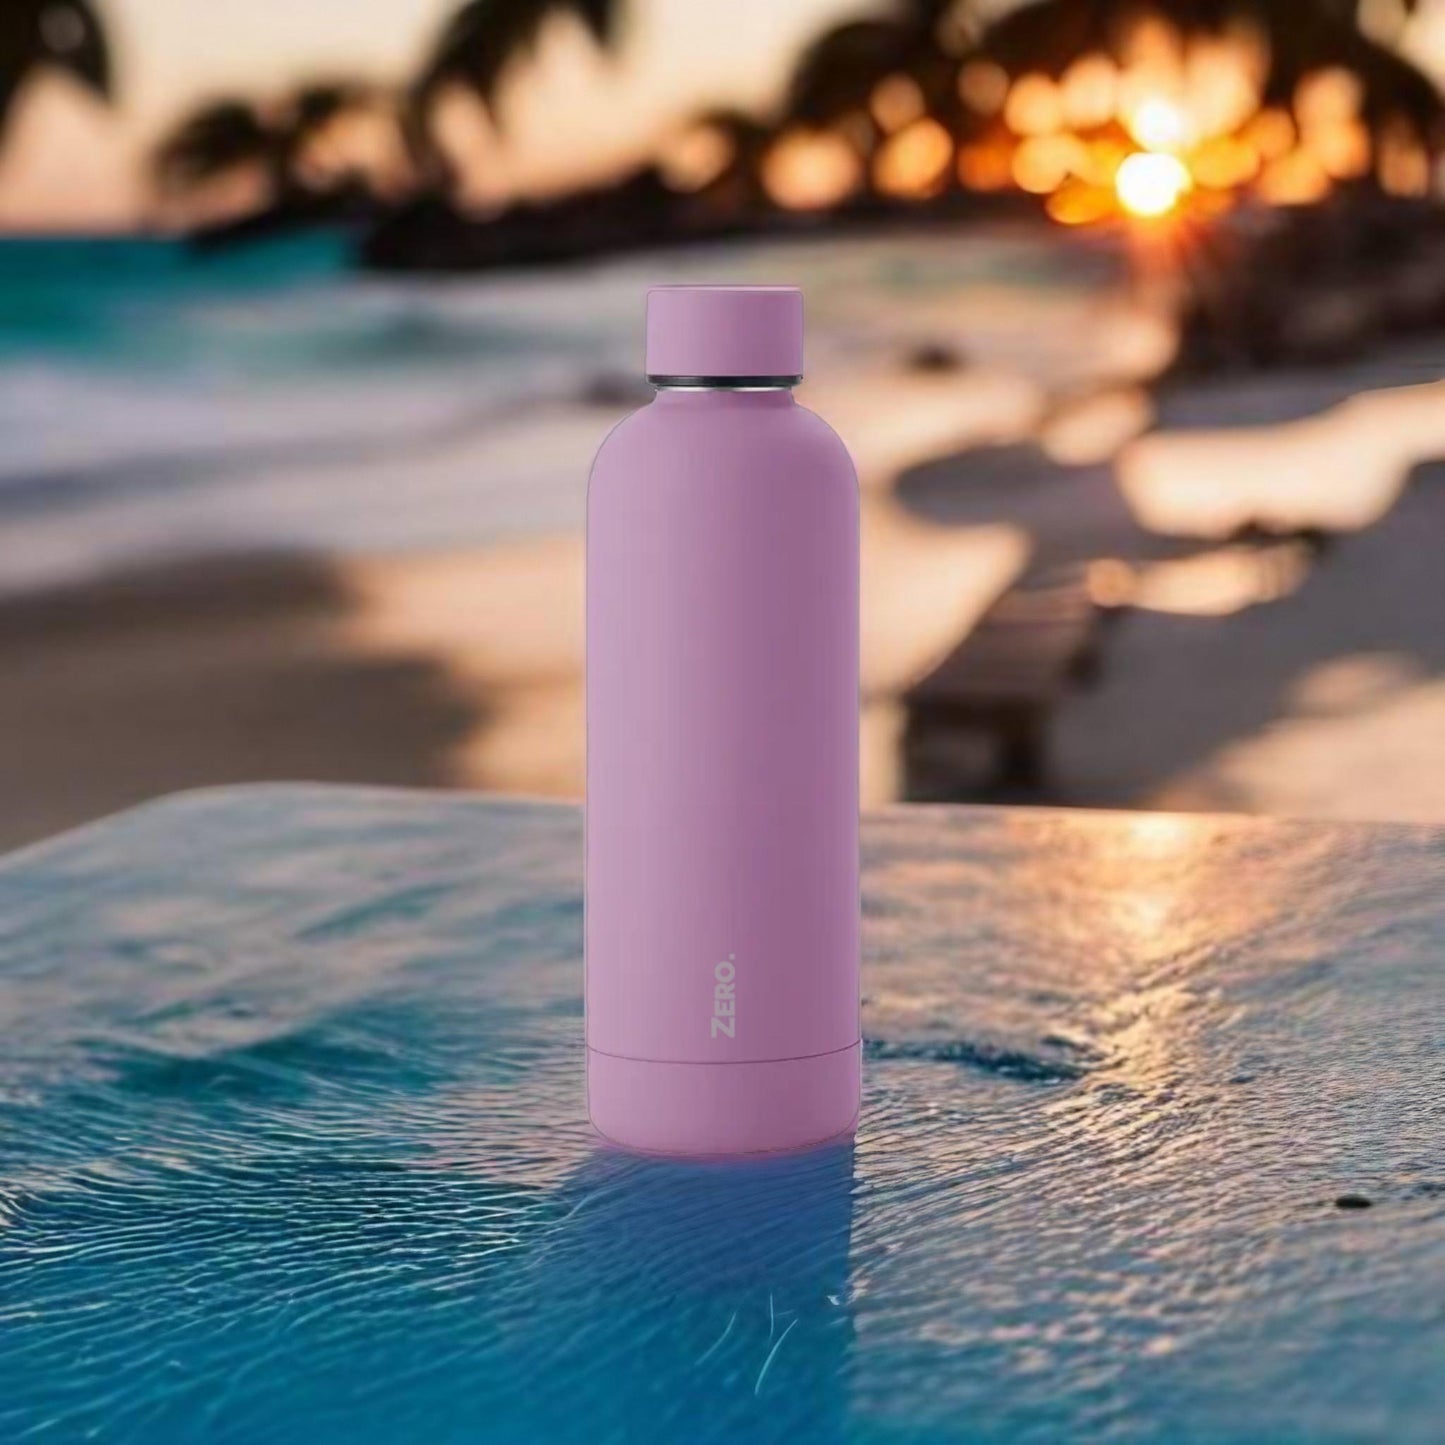 Zero Reusable Bottle - Lilac 500ml